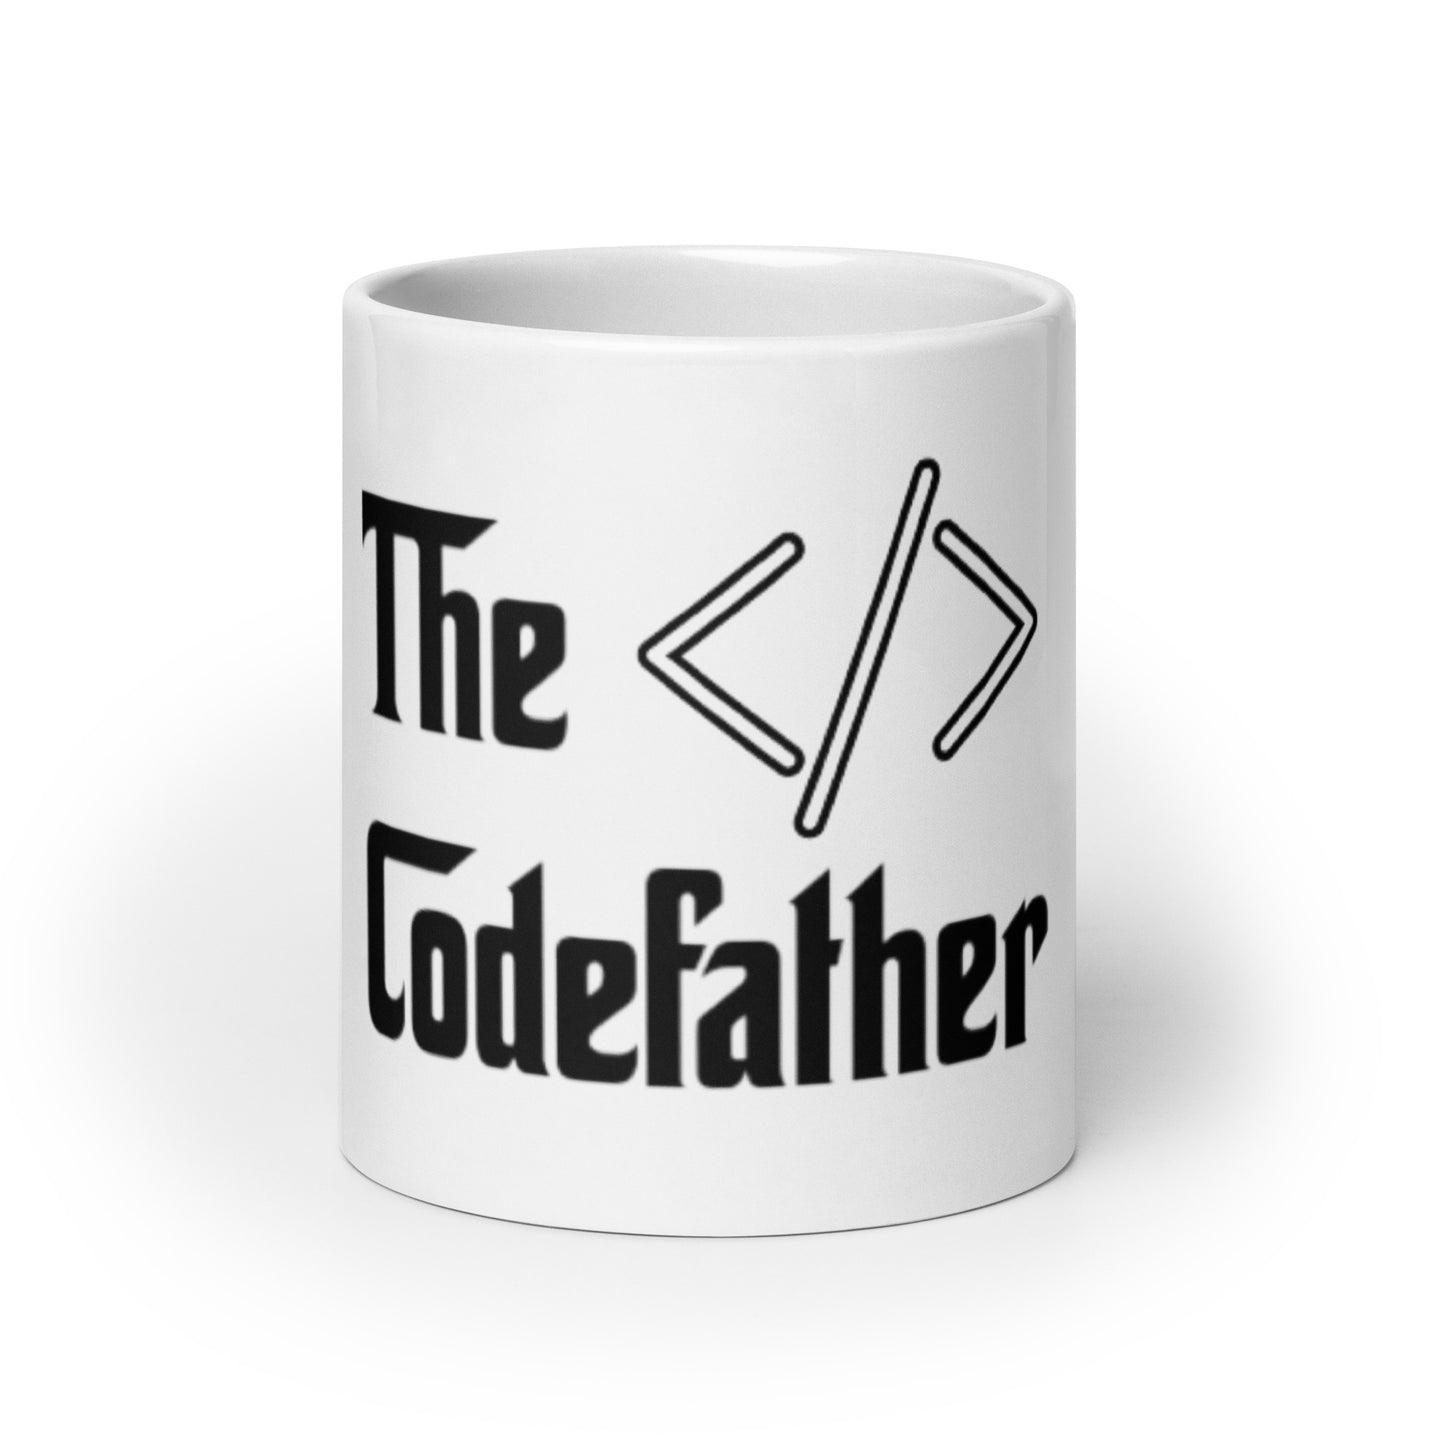 Code Father glossy mug